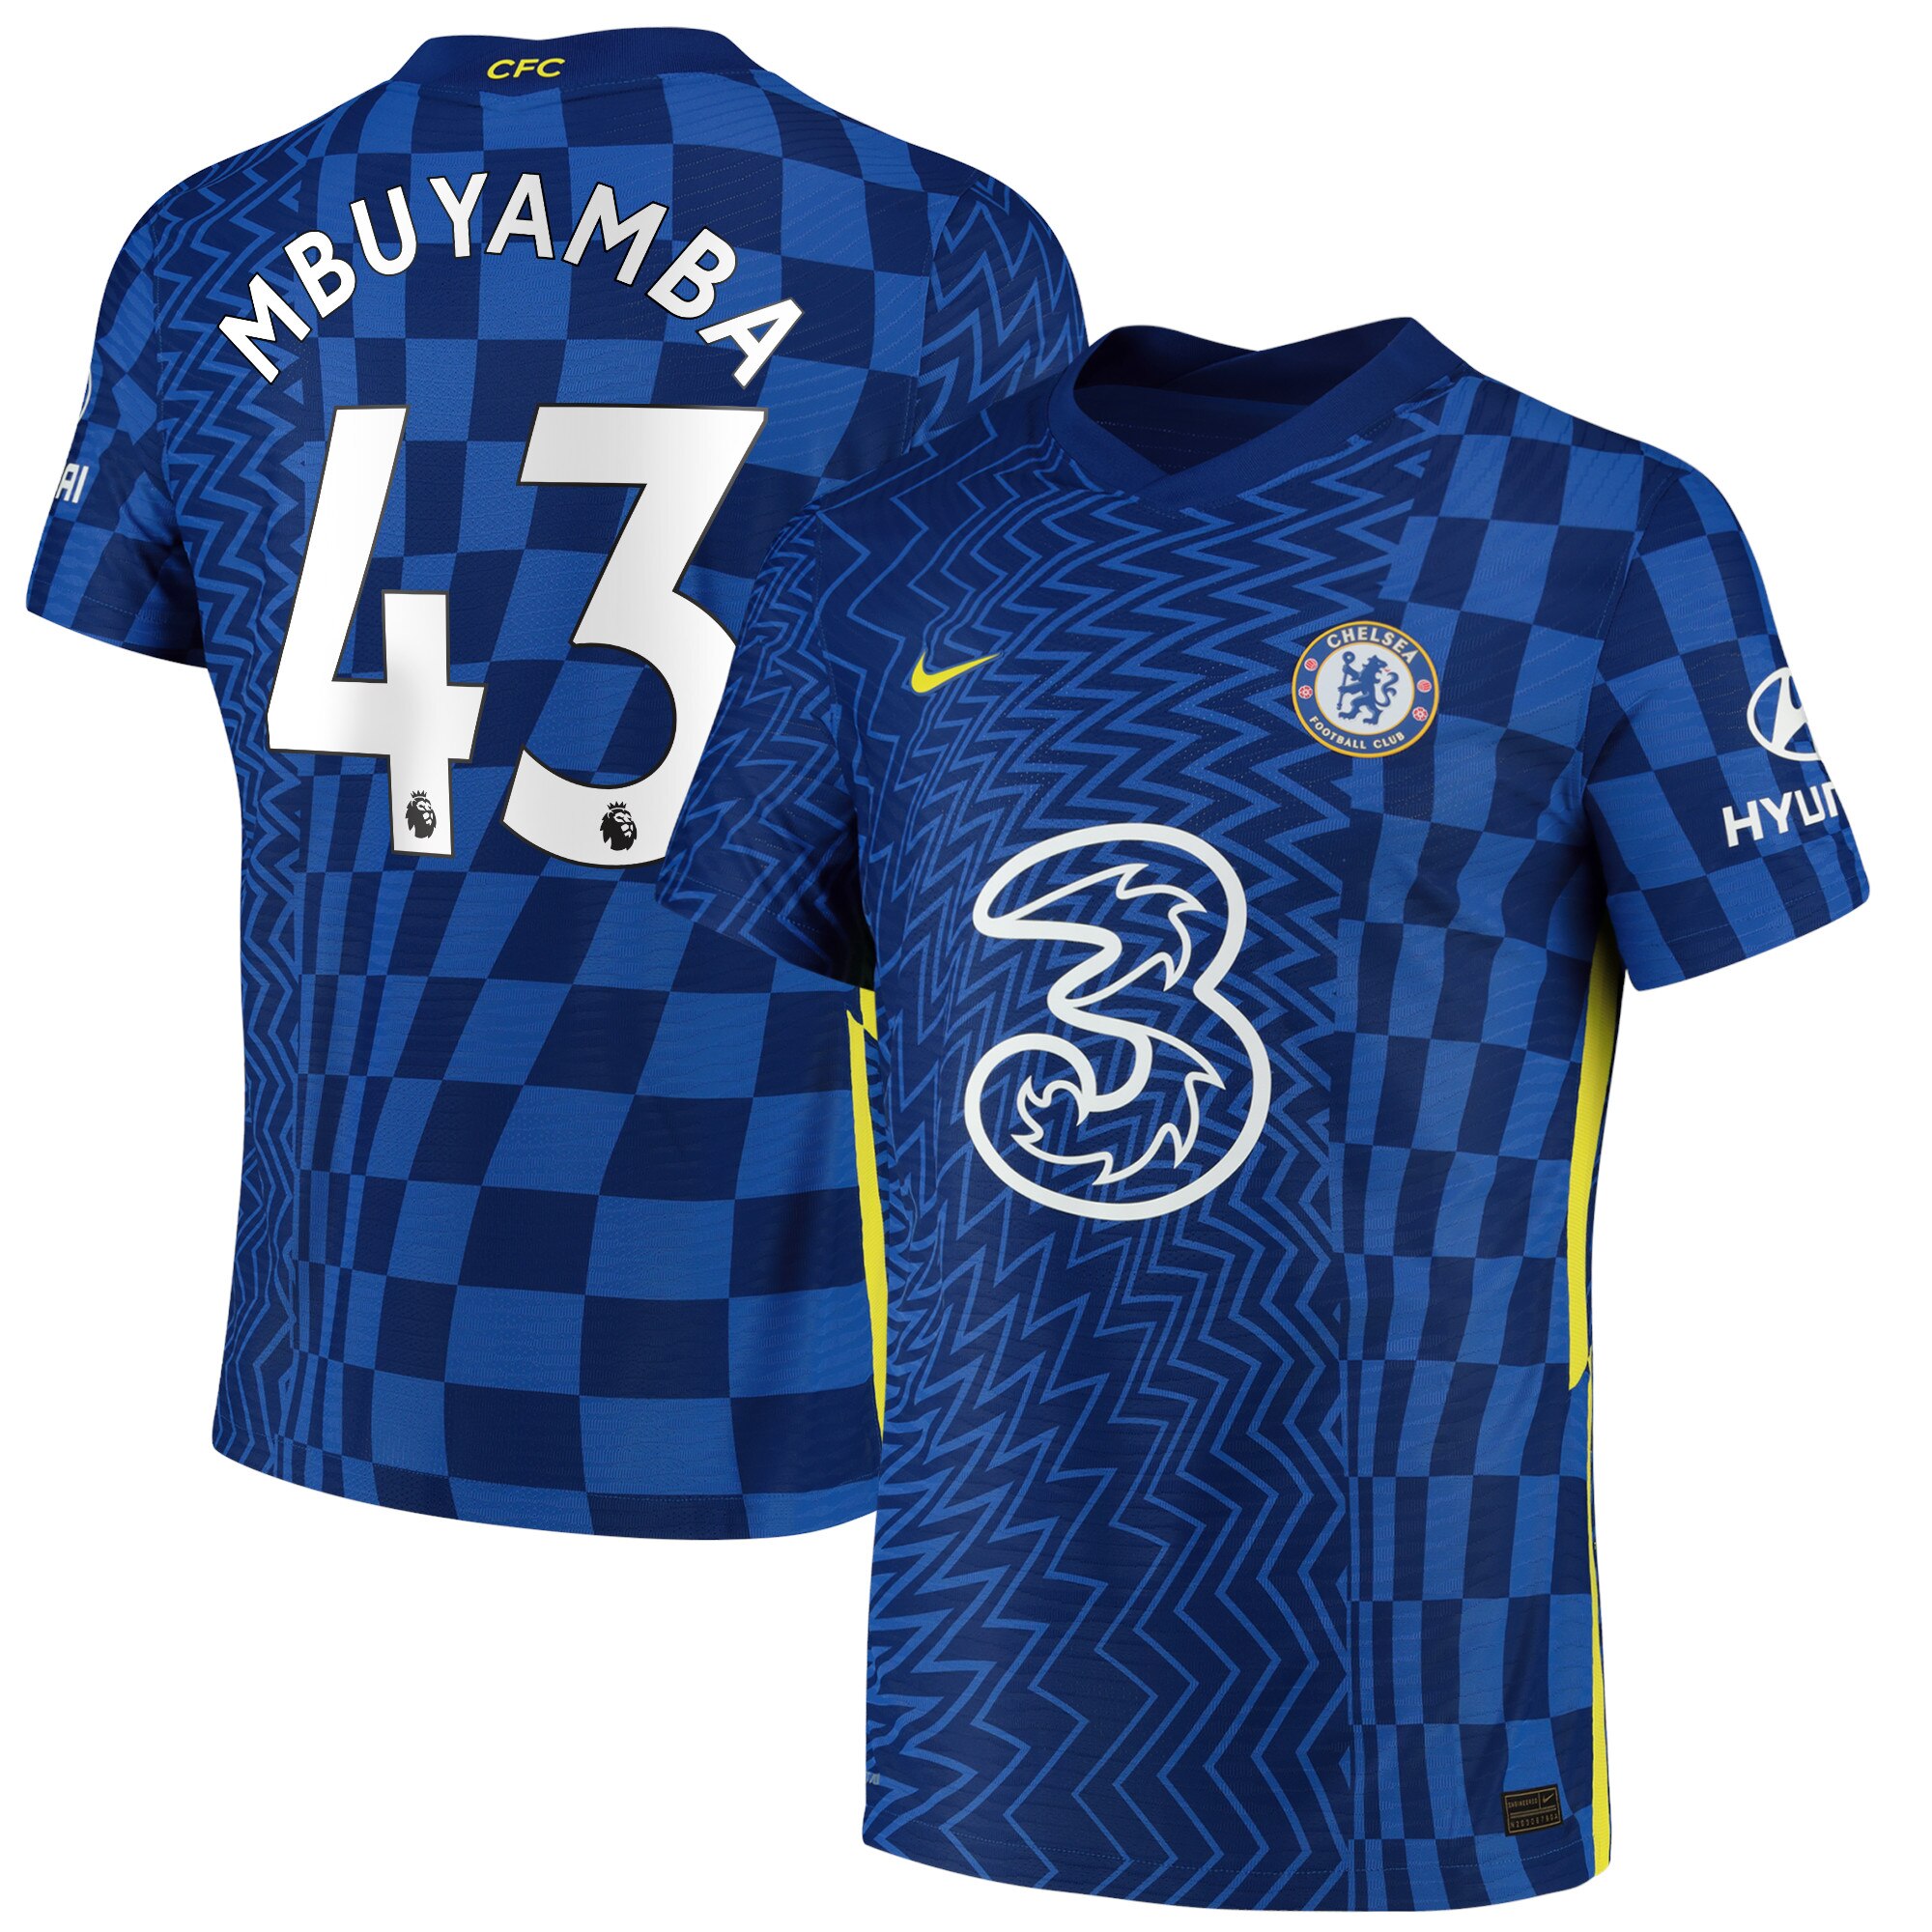 Chelsea Home Vapor Match Shirt 2021-22 with Mbuyamba 43 printing